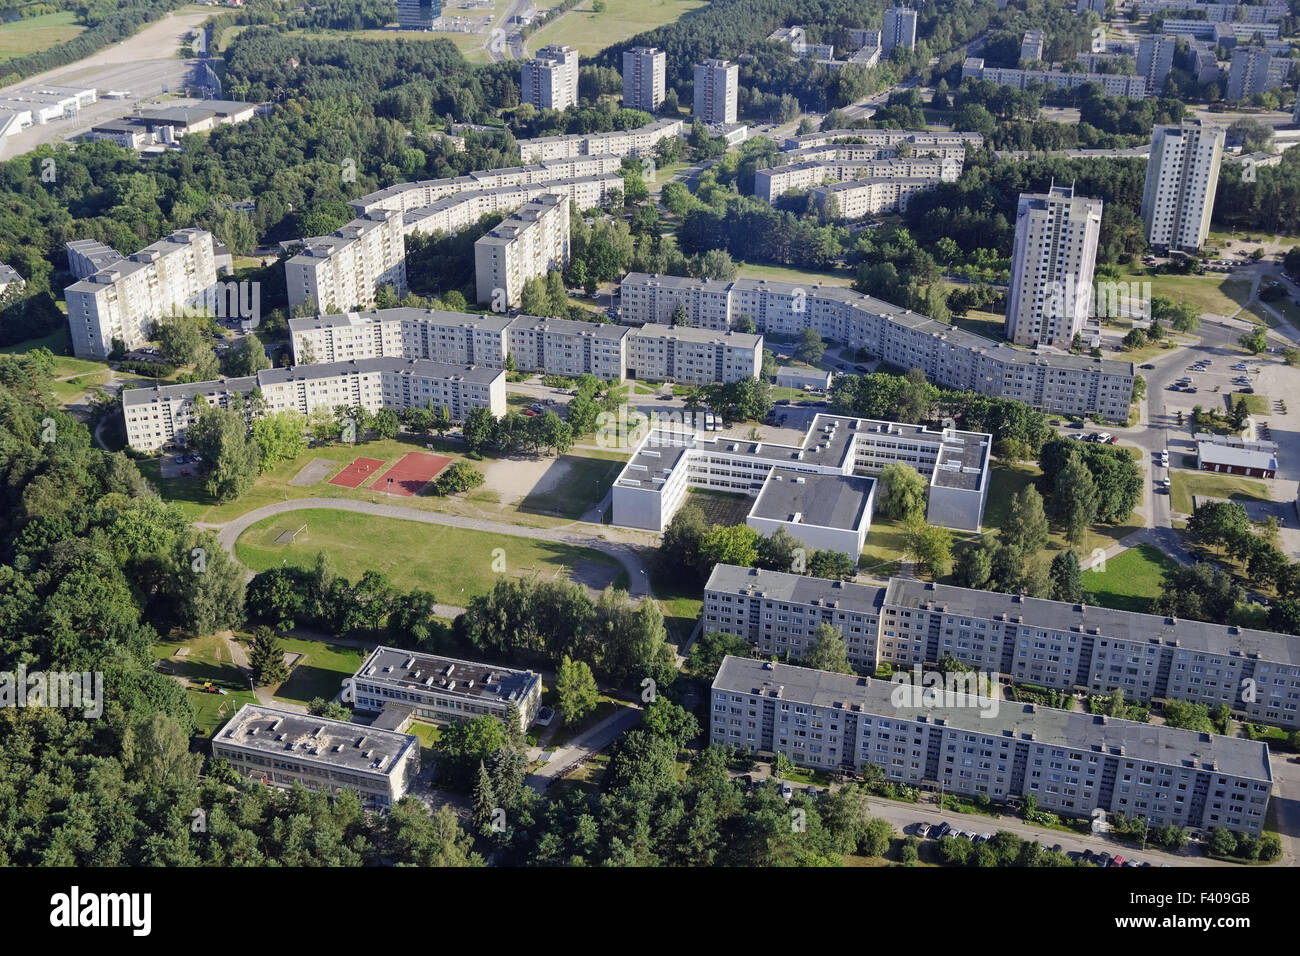 Urban area in style of Soviet period Stock Photo